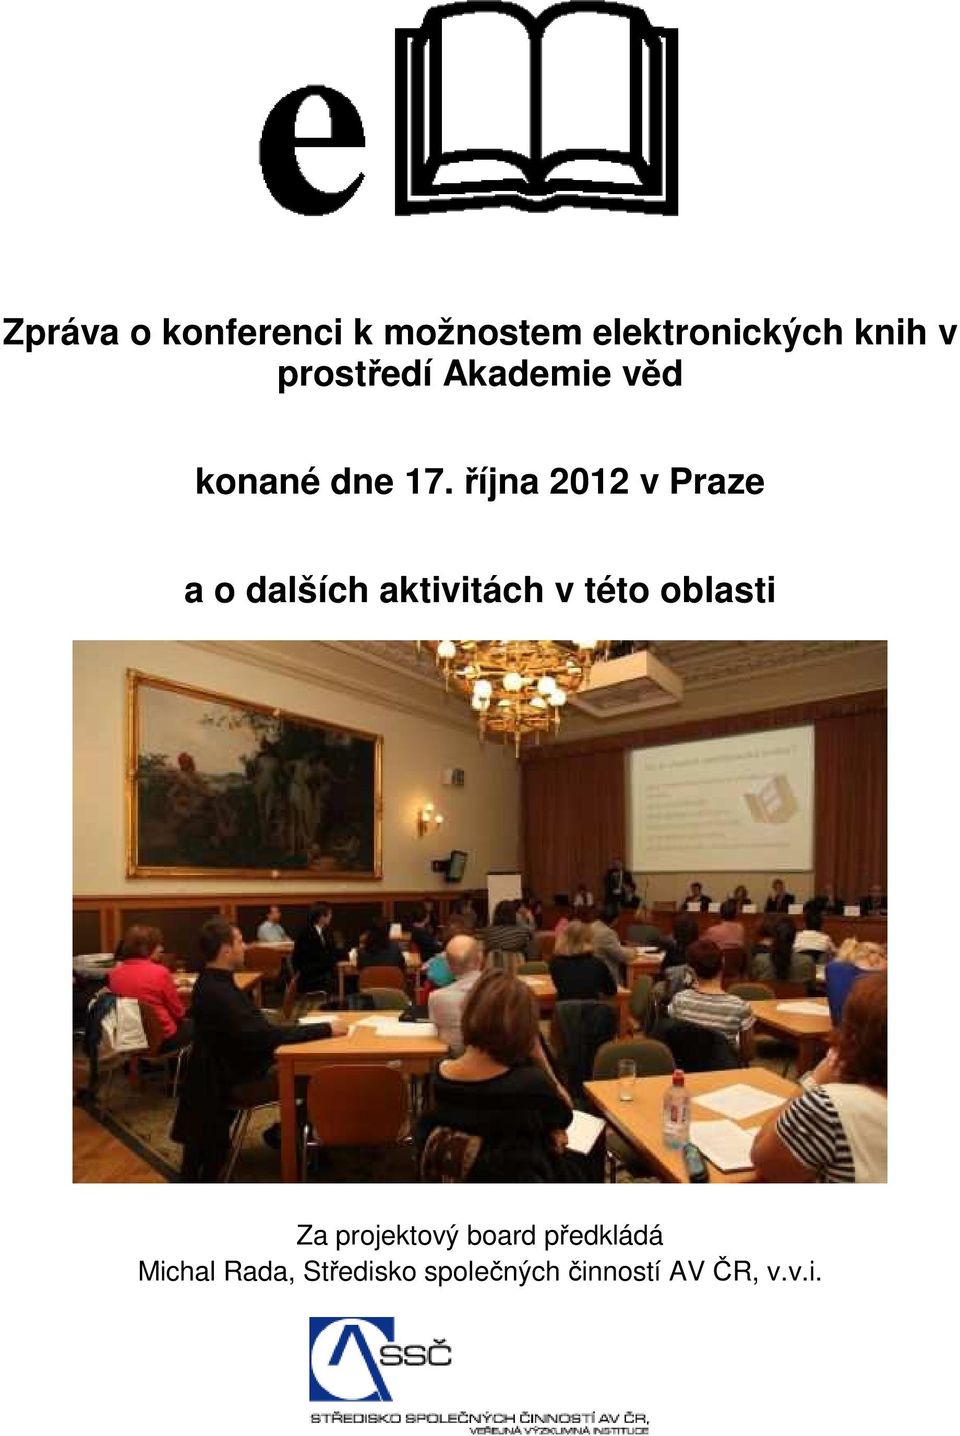 října 2012 v Praze a o dalších aktivitách v této oblasti